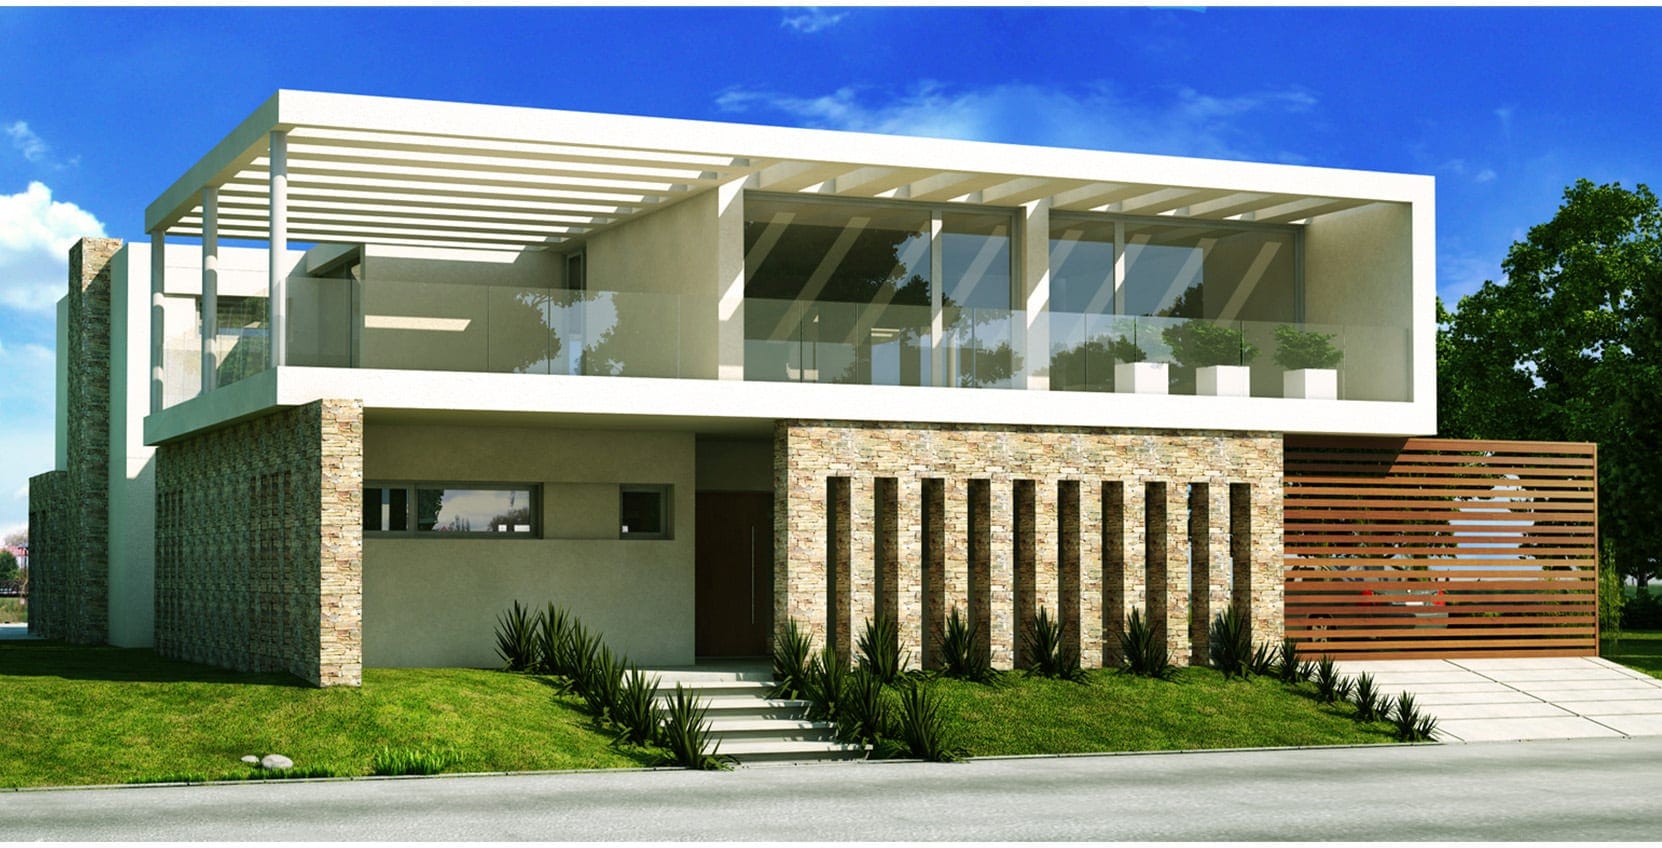 2015. Casa en Santa Bárbara 1